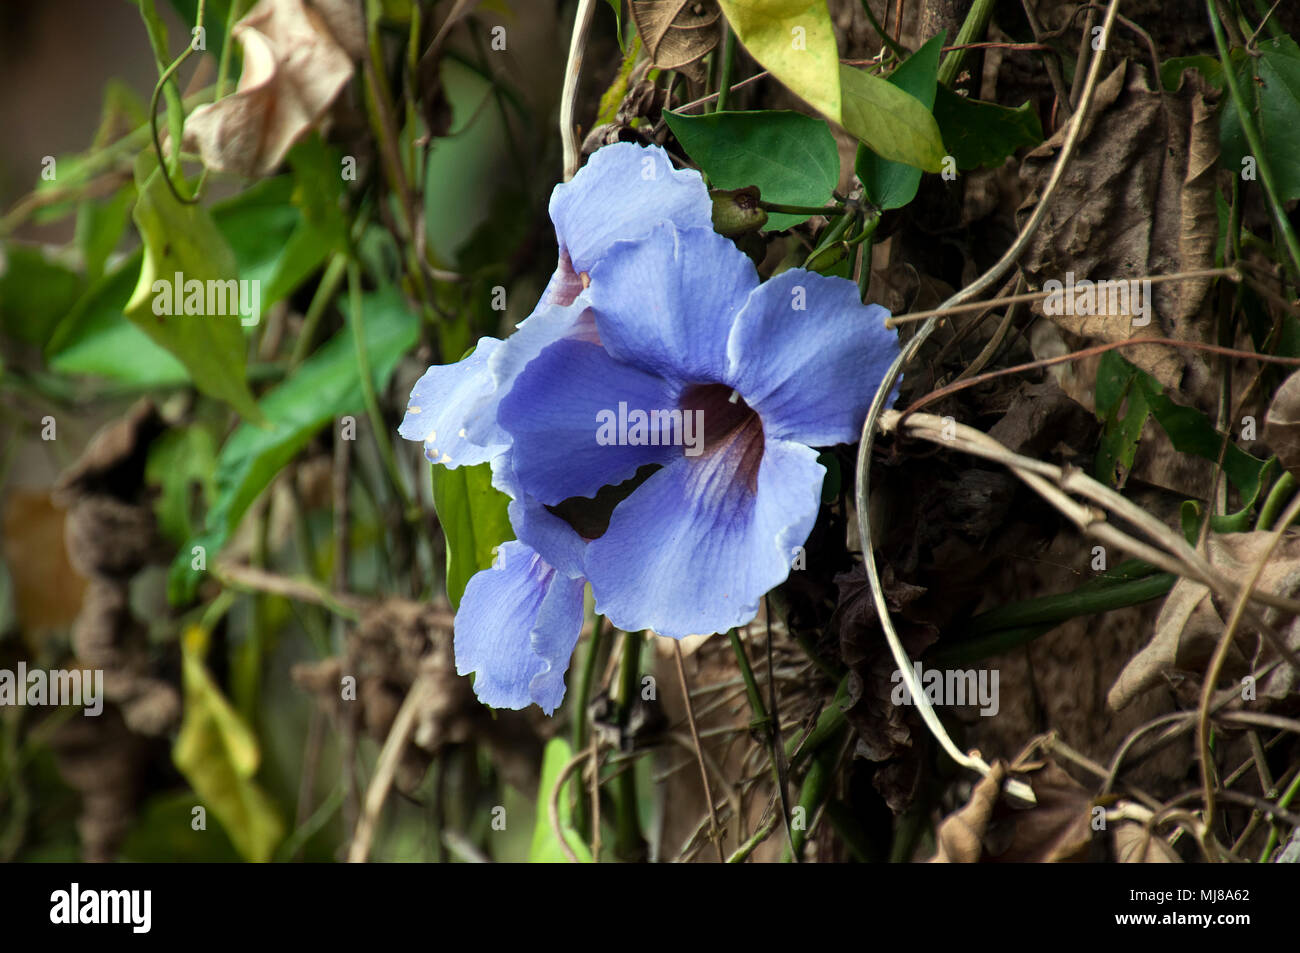 Banlung Cambodia, Thunbergia grandiflora vine with blue flower Stock Photo